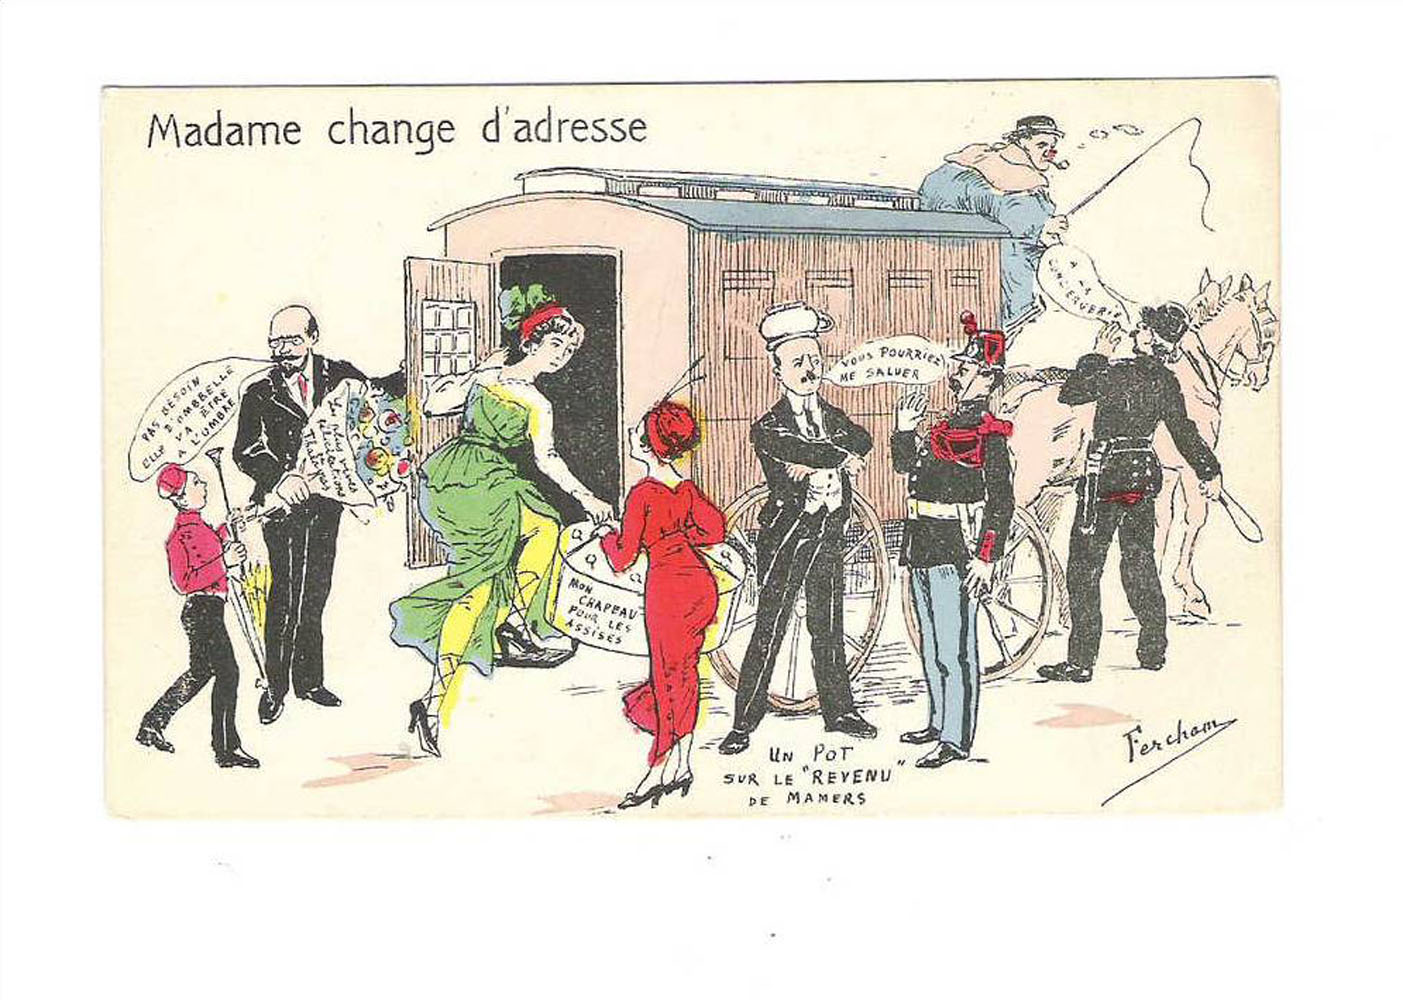 Madame change d'addresse" ("Madame has a change of address.")